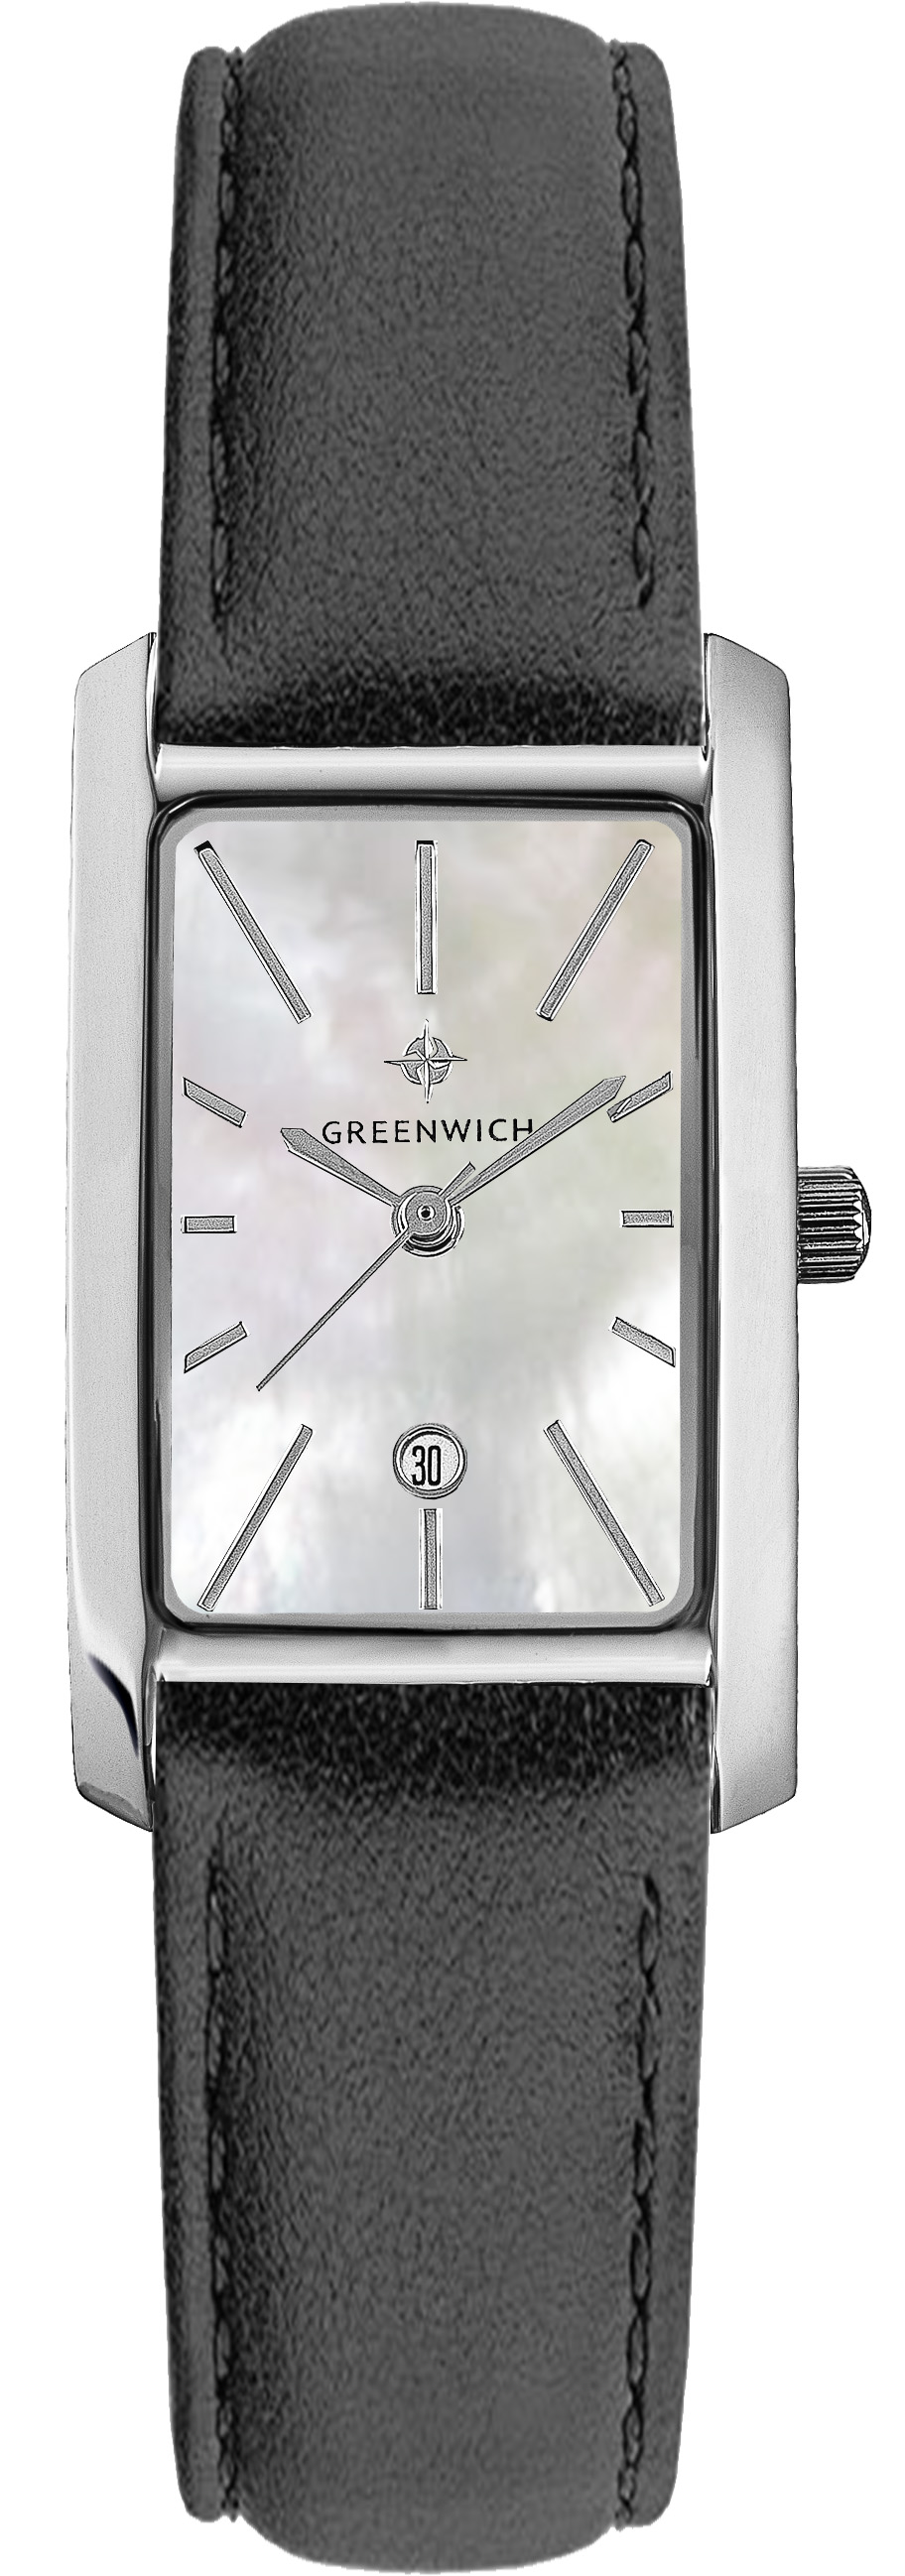 GW 511.11.13, женские часы Greenwich Vesta